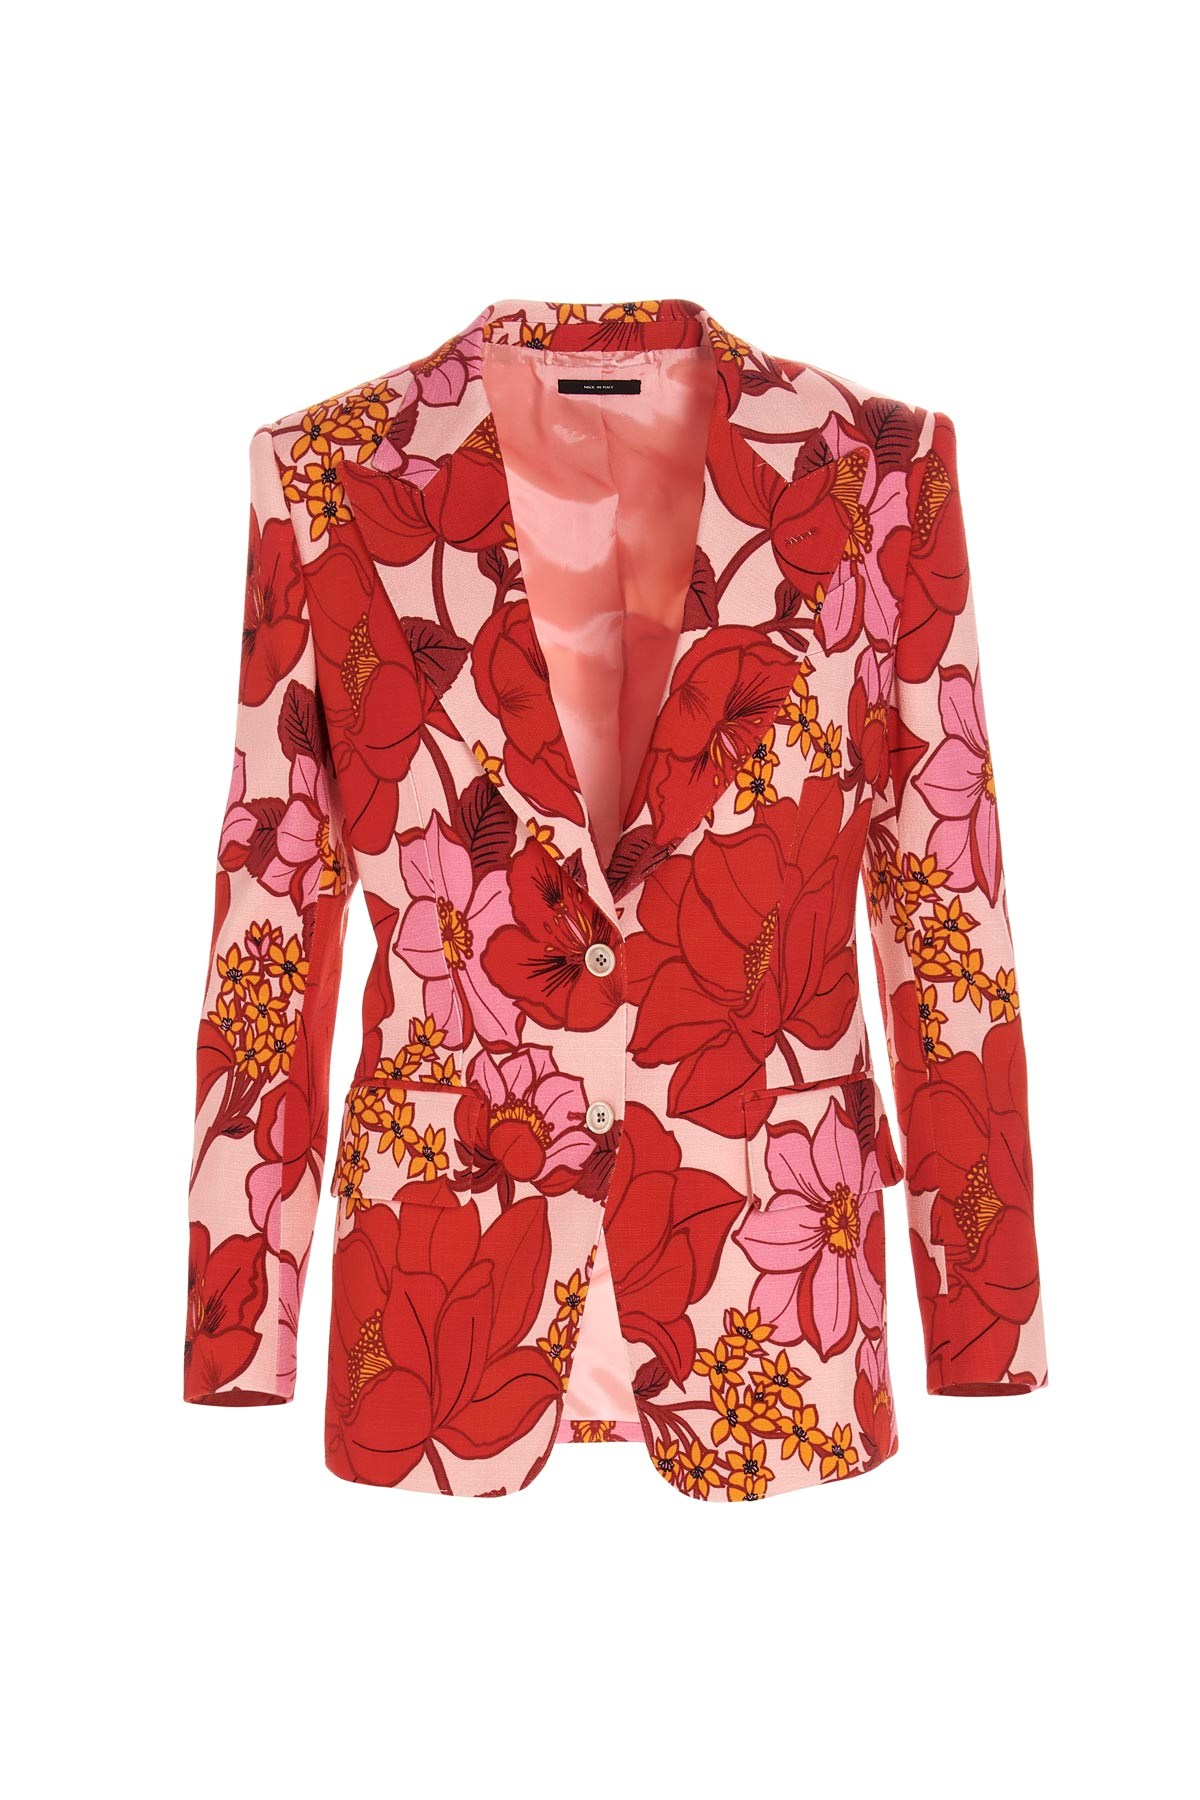 TOM FORD Single Breast Floral Print Blazer Jacket